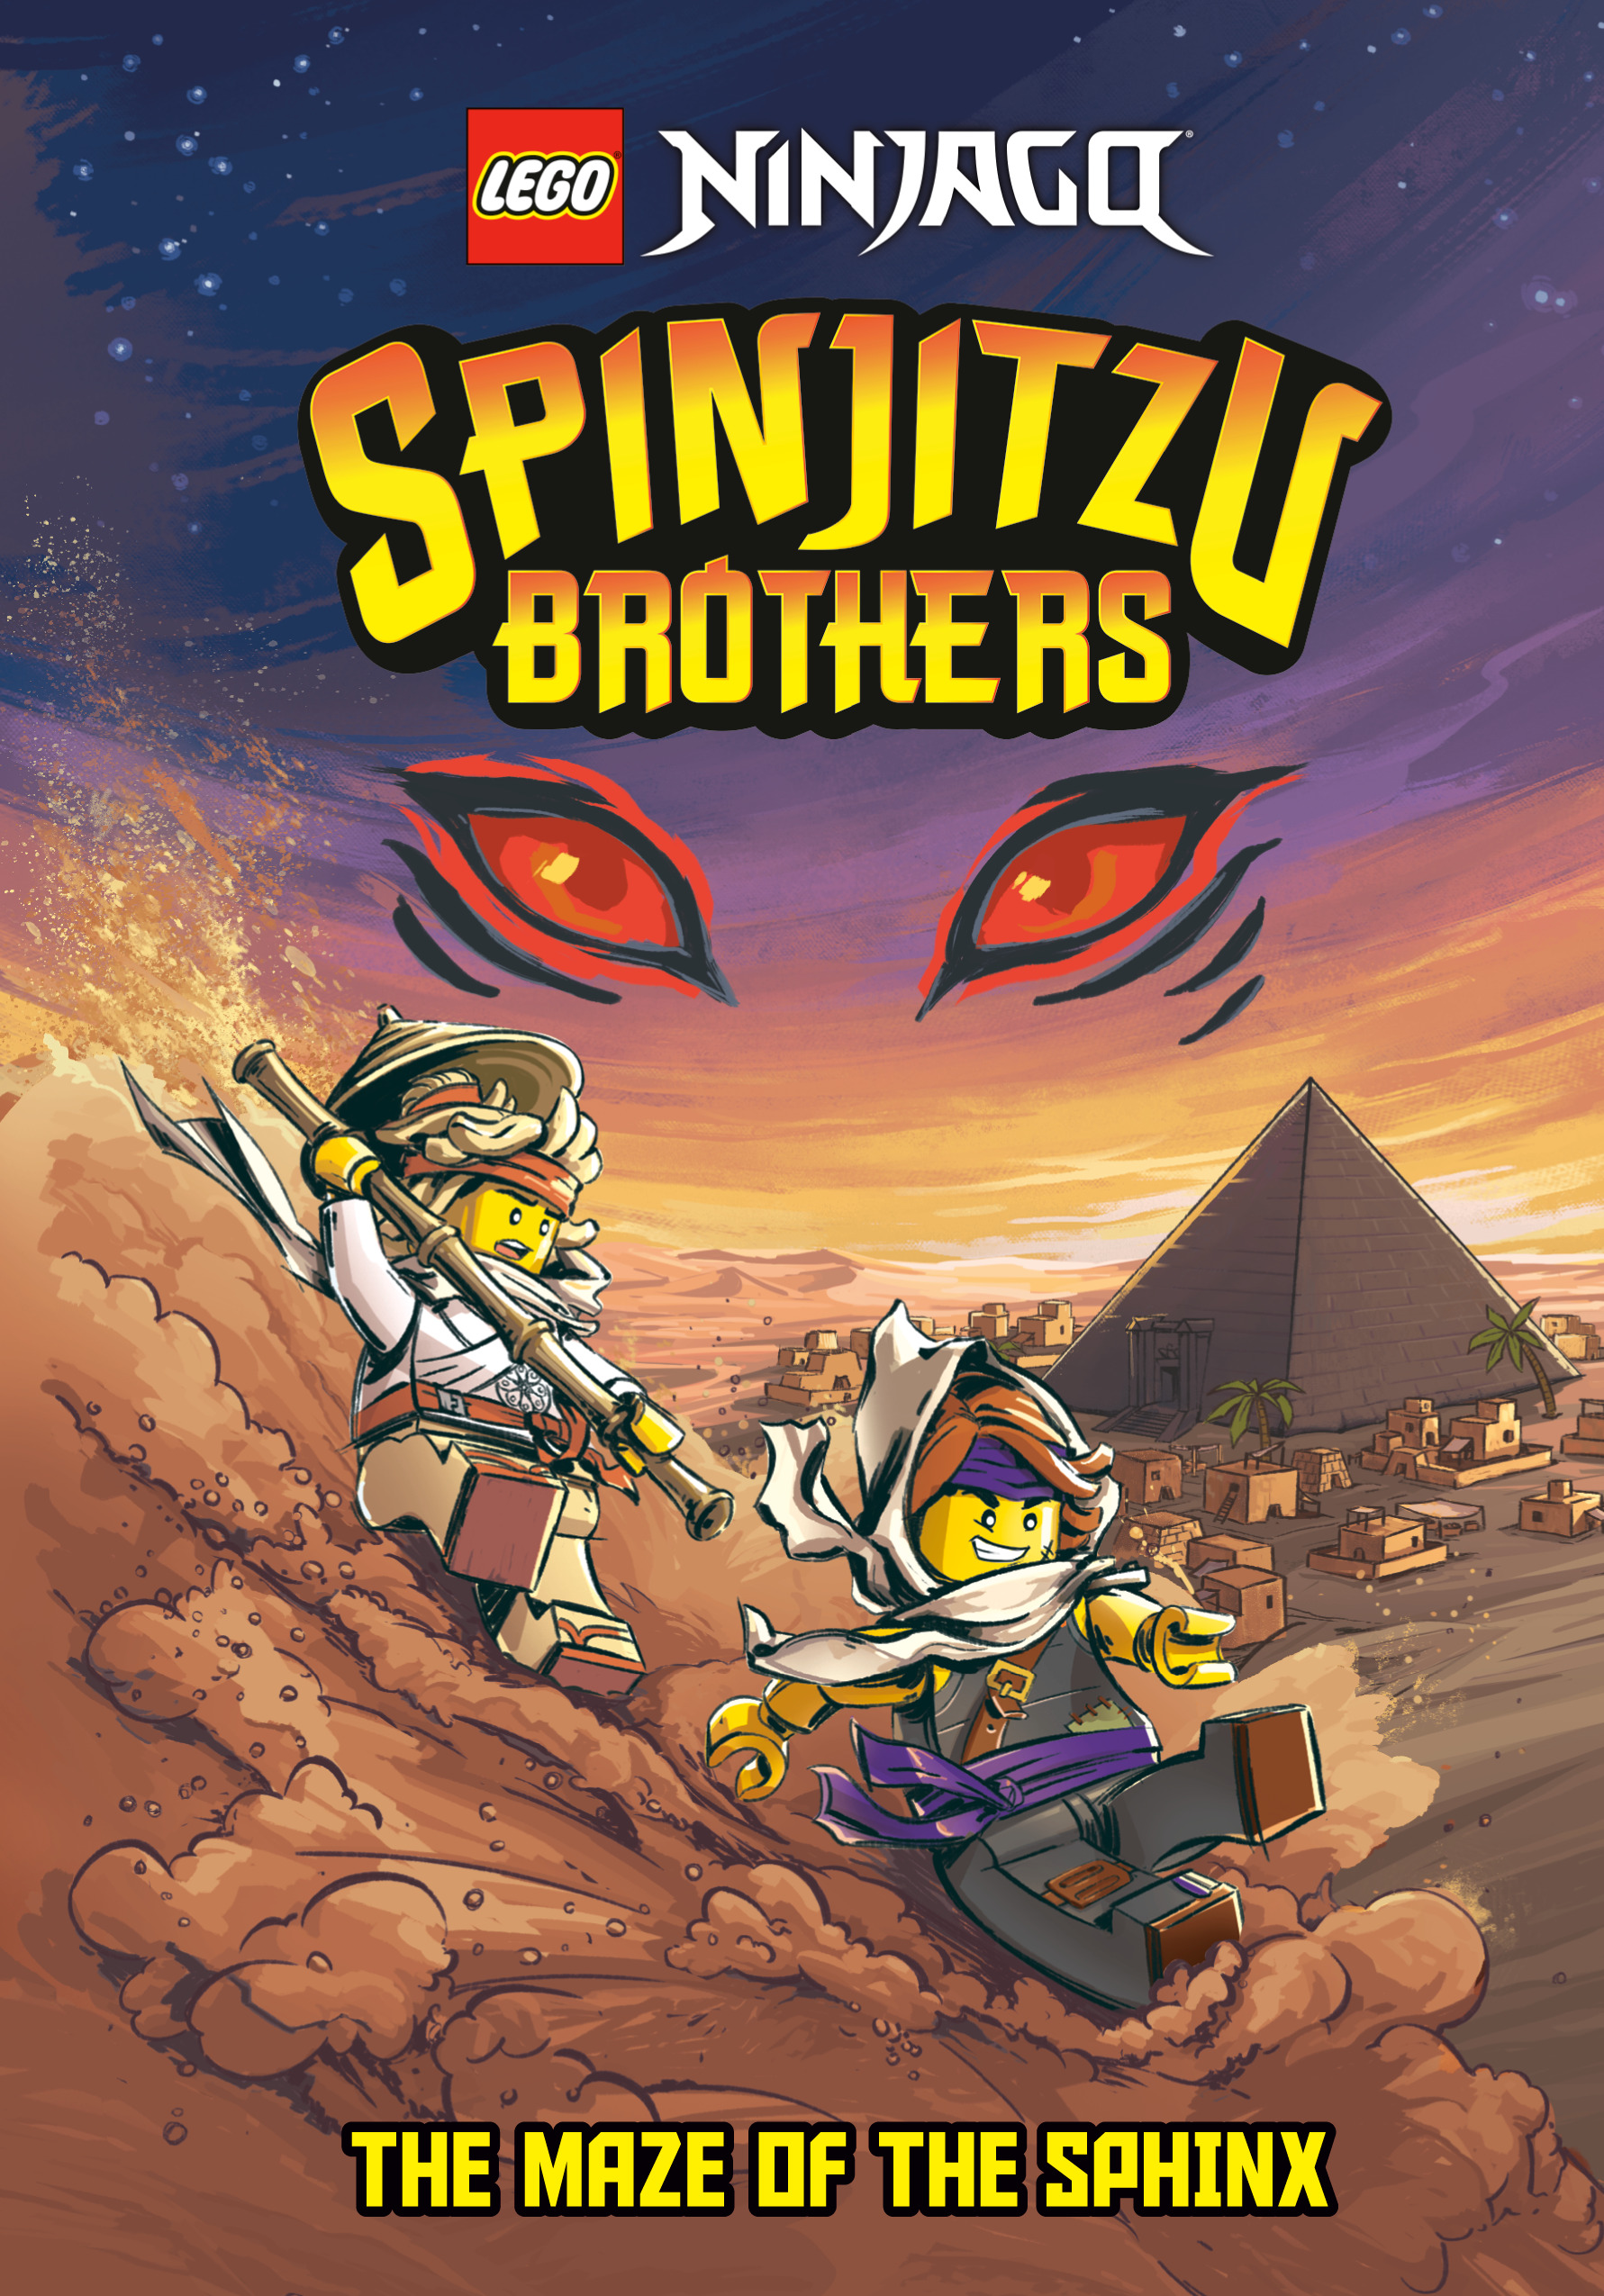 Spinjitzu Brothers #3: The Maze of the Sphinx (LEGO Ninjago) | 